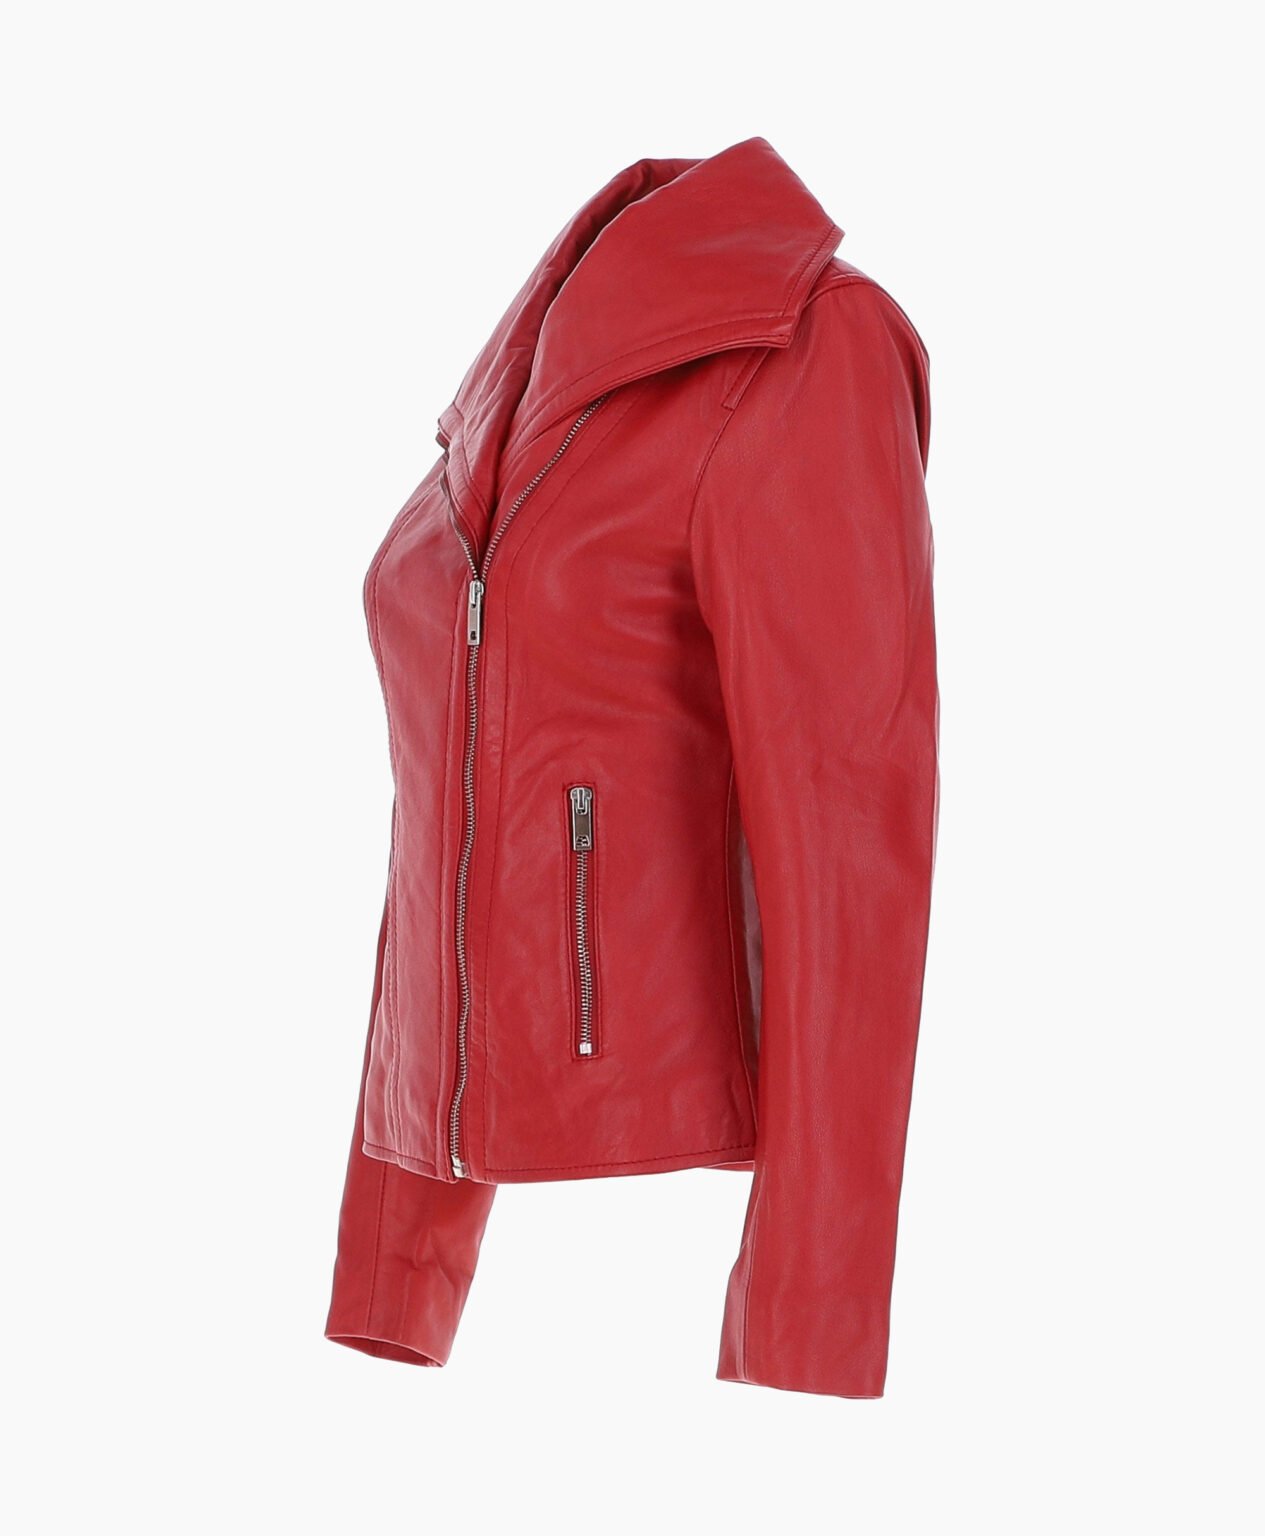 vogue-jacket-leather-jacket-fashion-collar-red-shelby-image201